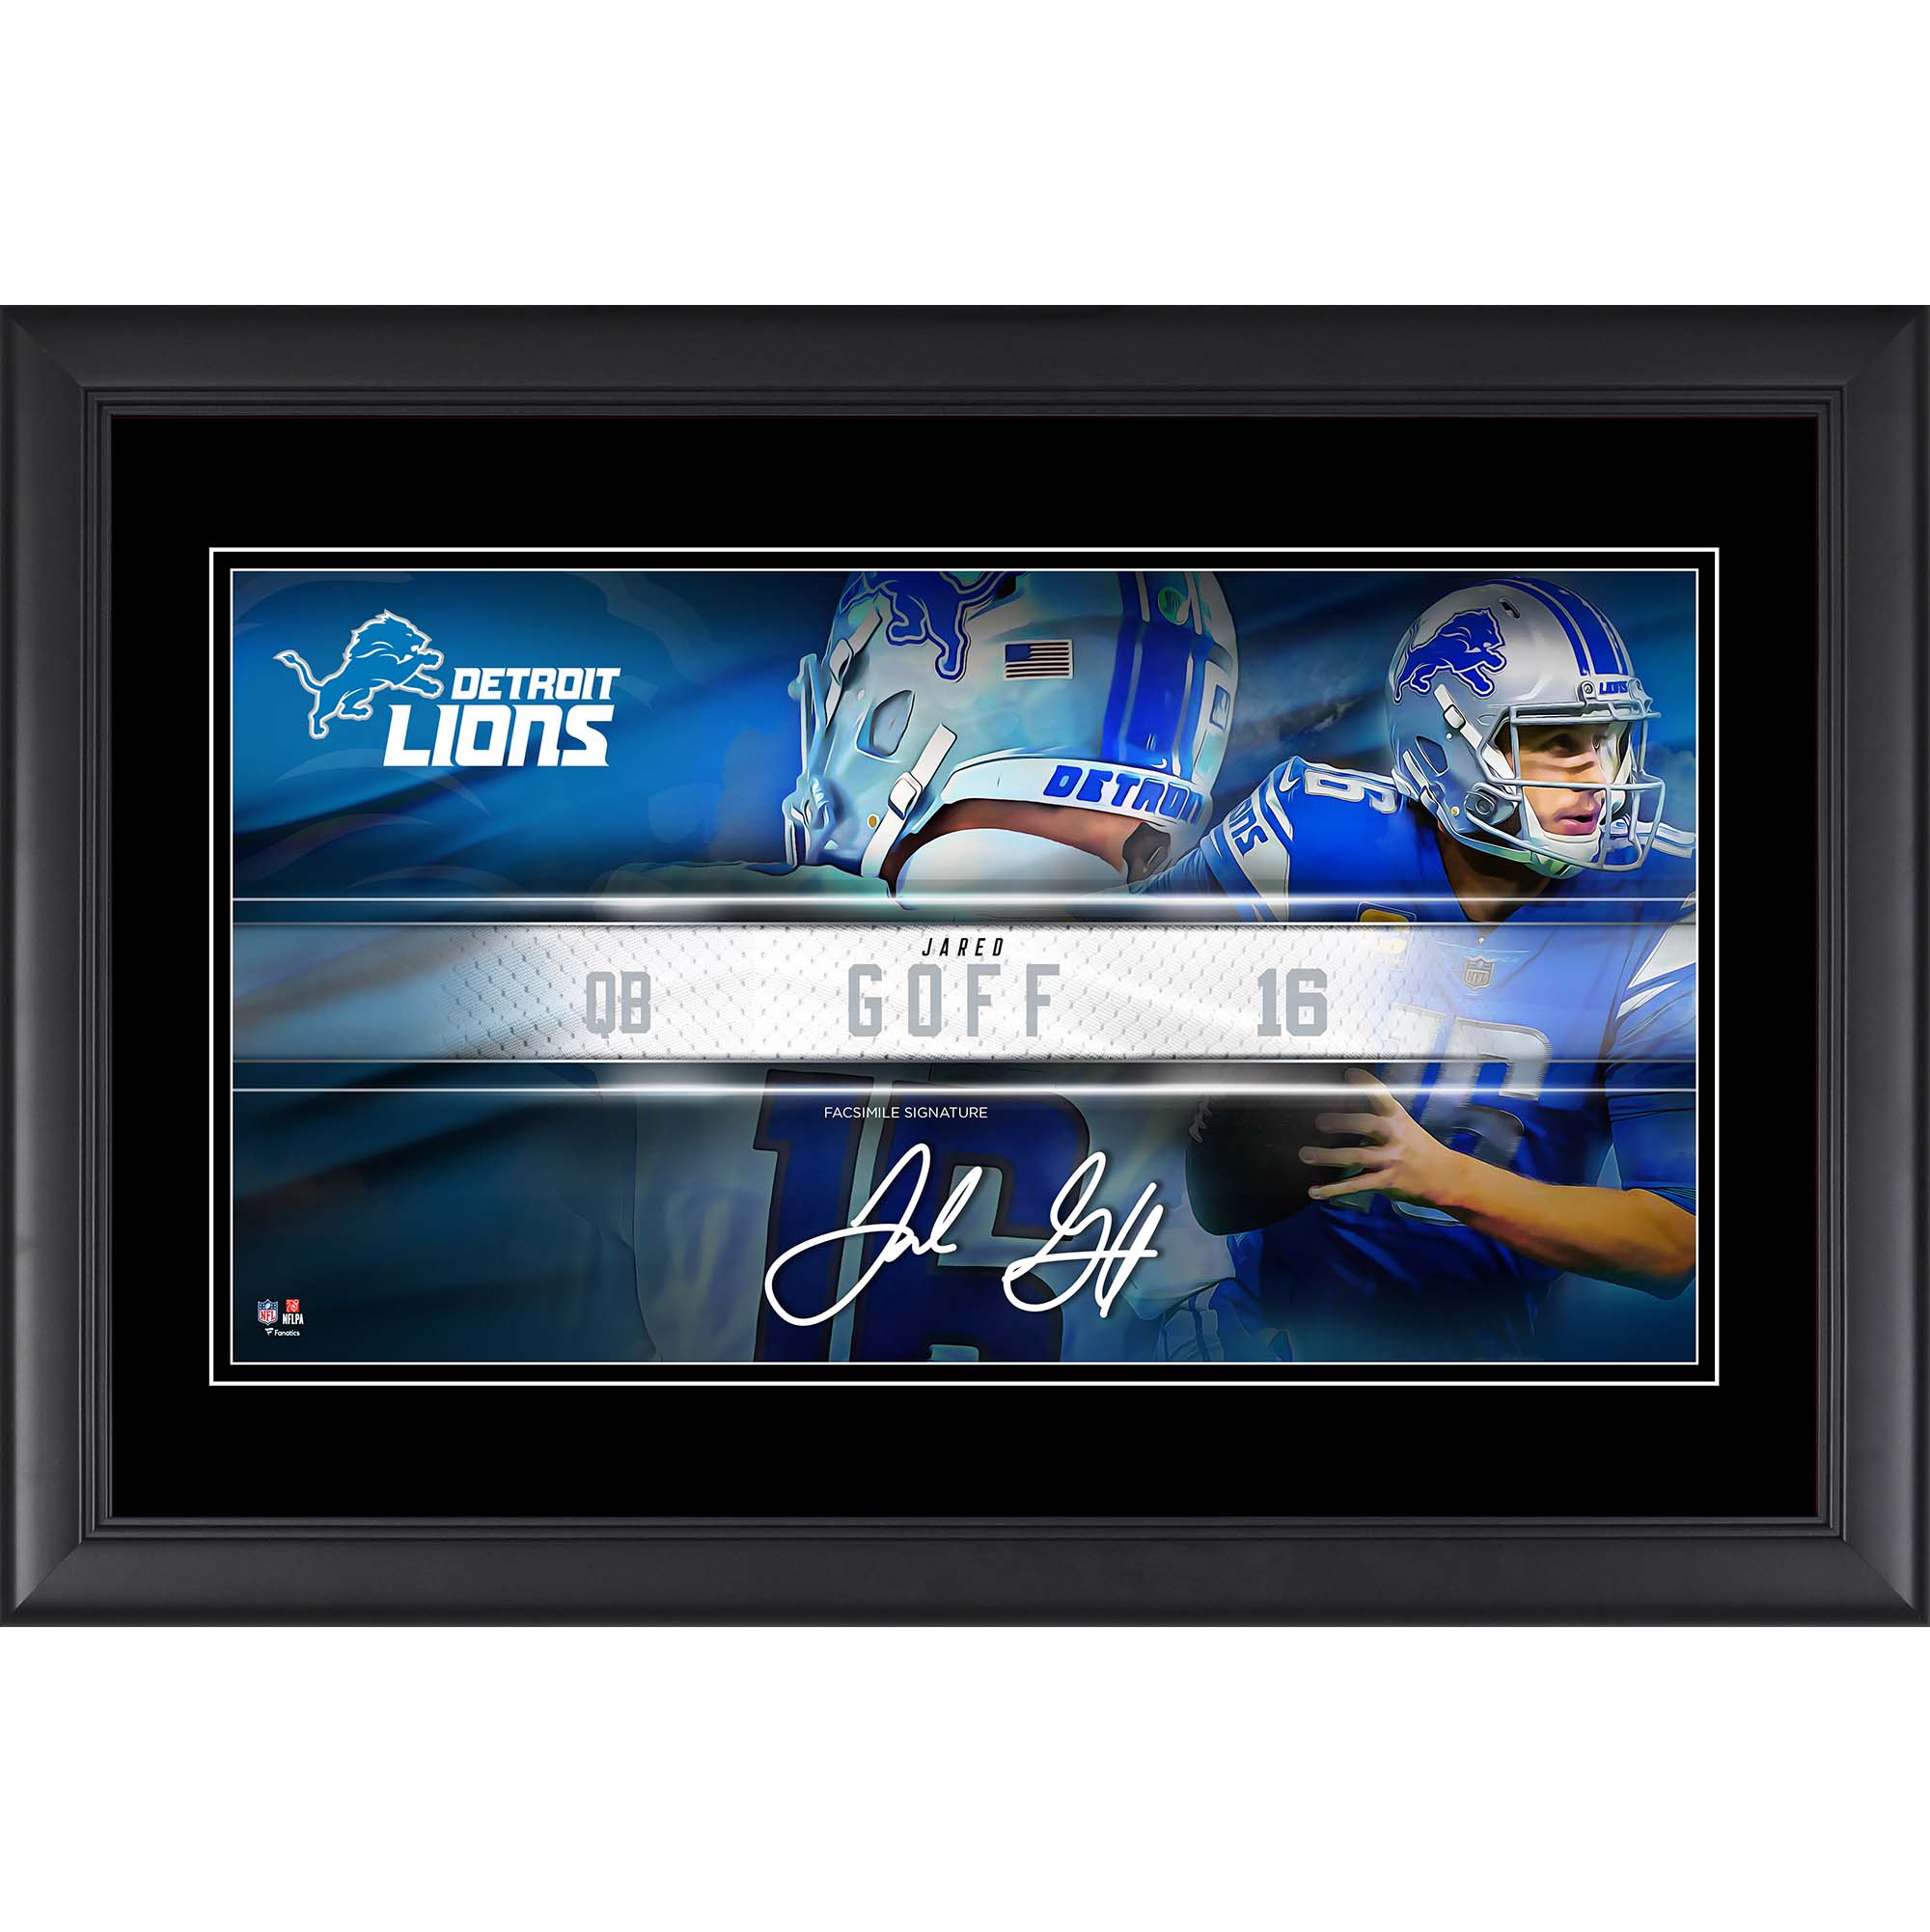 Jared Goff Detroit Lions Faksimile-Signatur, gerahmt, 10 x 18 Zoll, Spieler-Namensschild-Collage